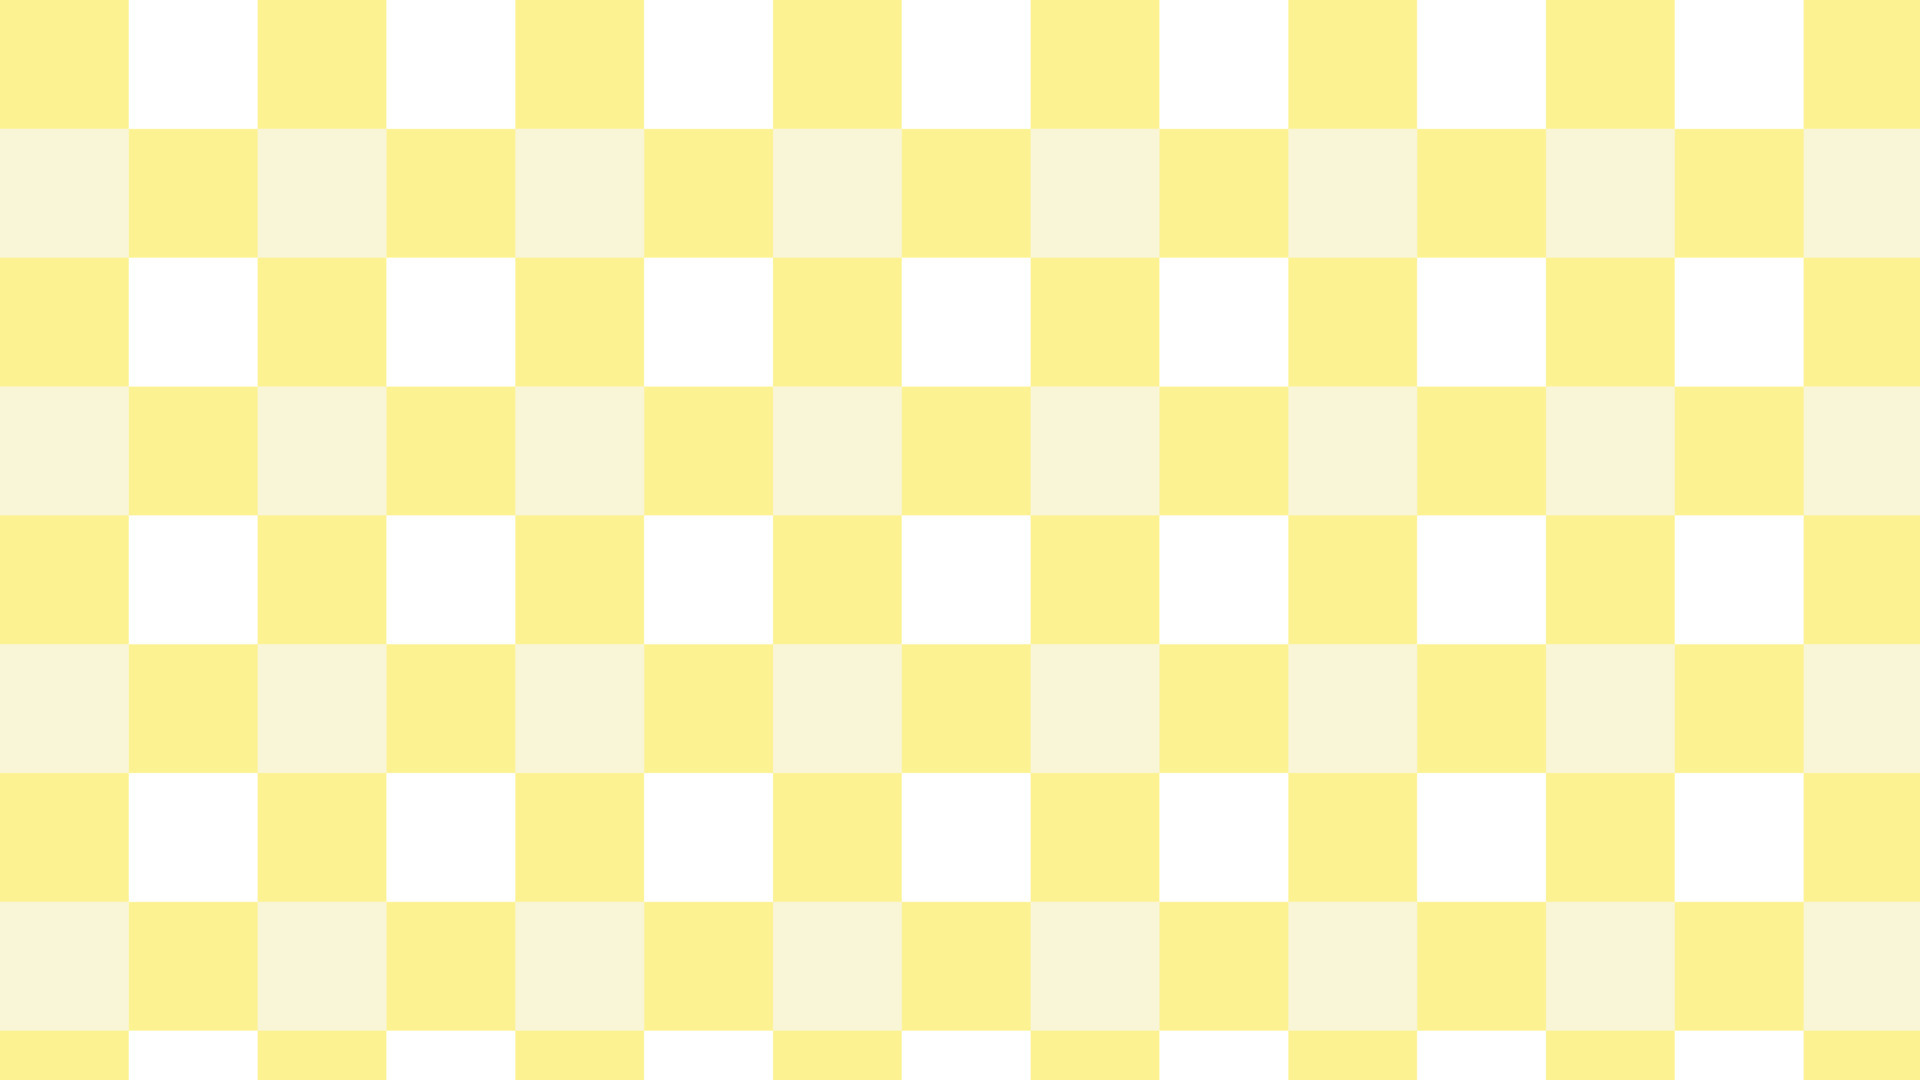 Verifica fundo amarelo xadrez ❤ liked on Polyvore featuring backgrounds